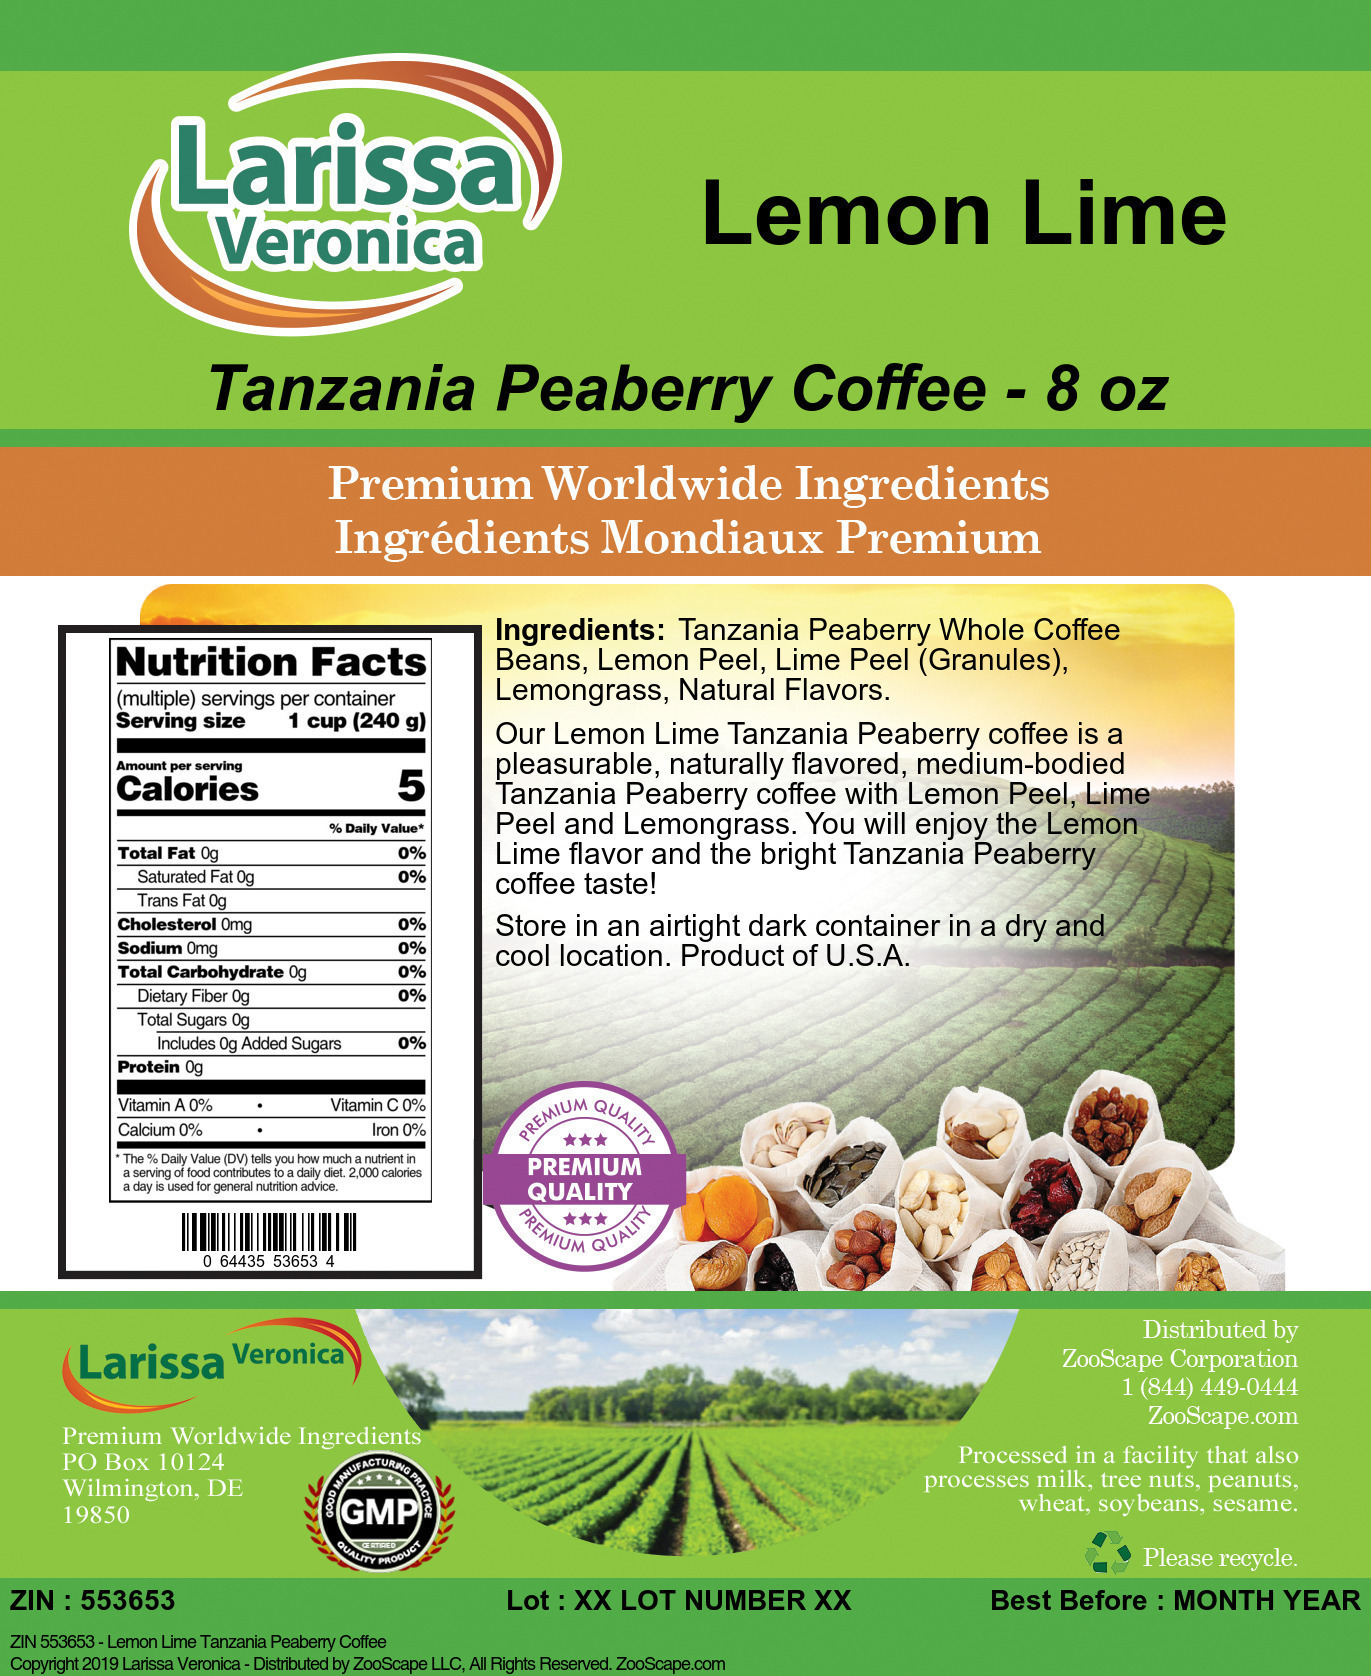 Lemon Lime Tanzania Peaberry Coffee - Label